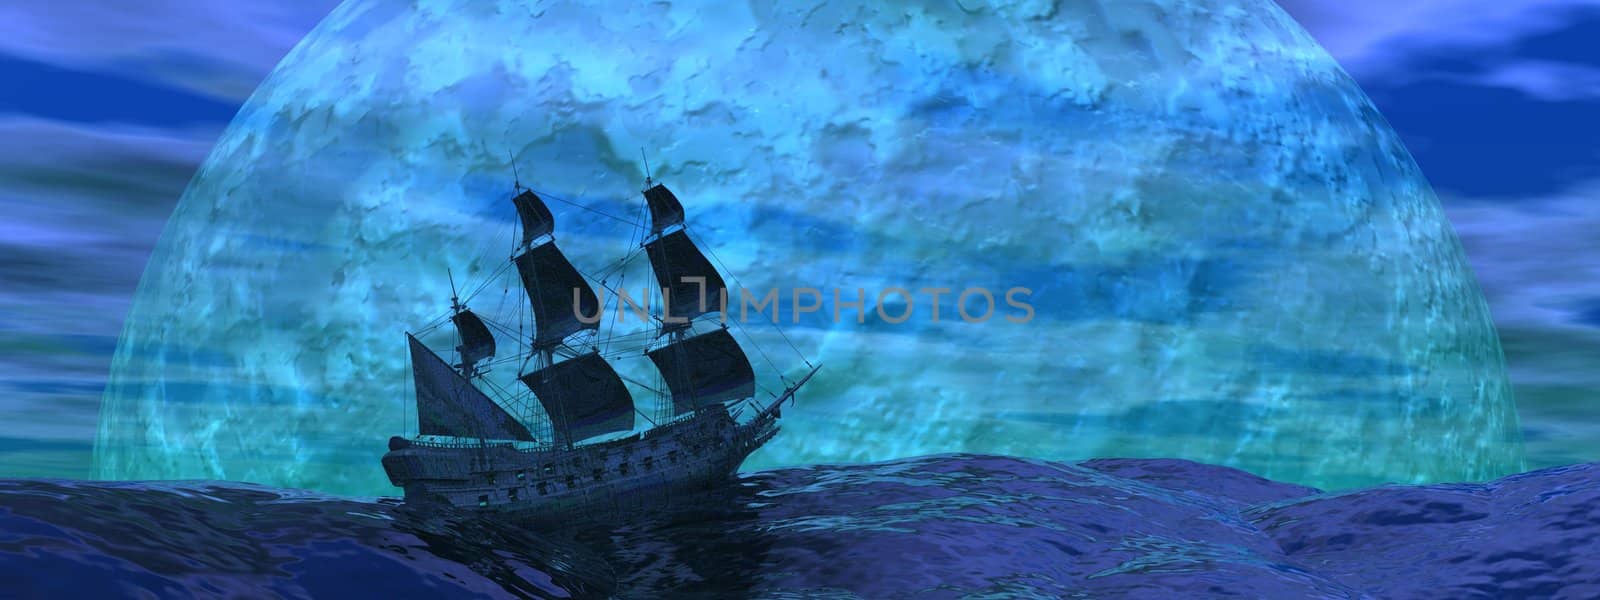 Flying dutchman boat by night - 3D render by Elenaphotos21